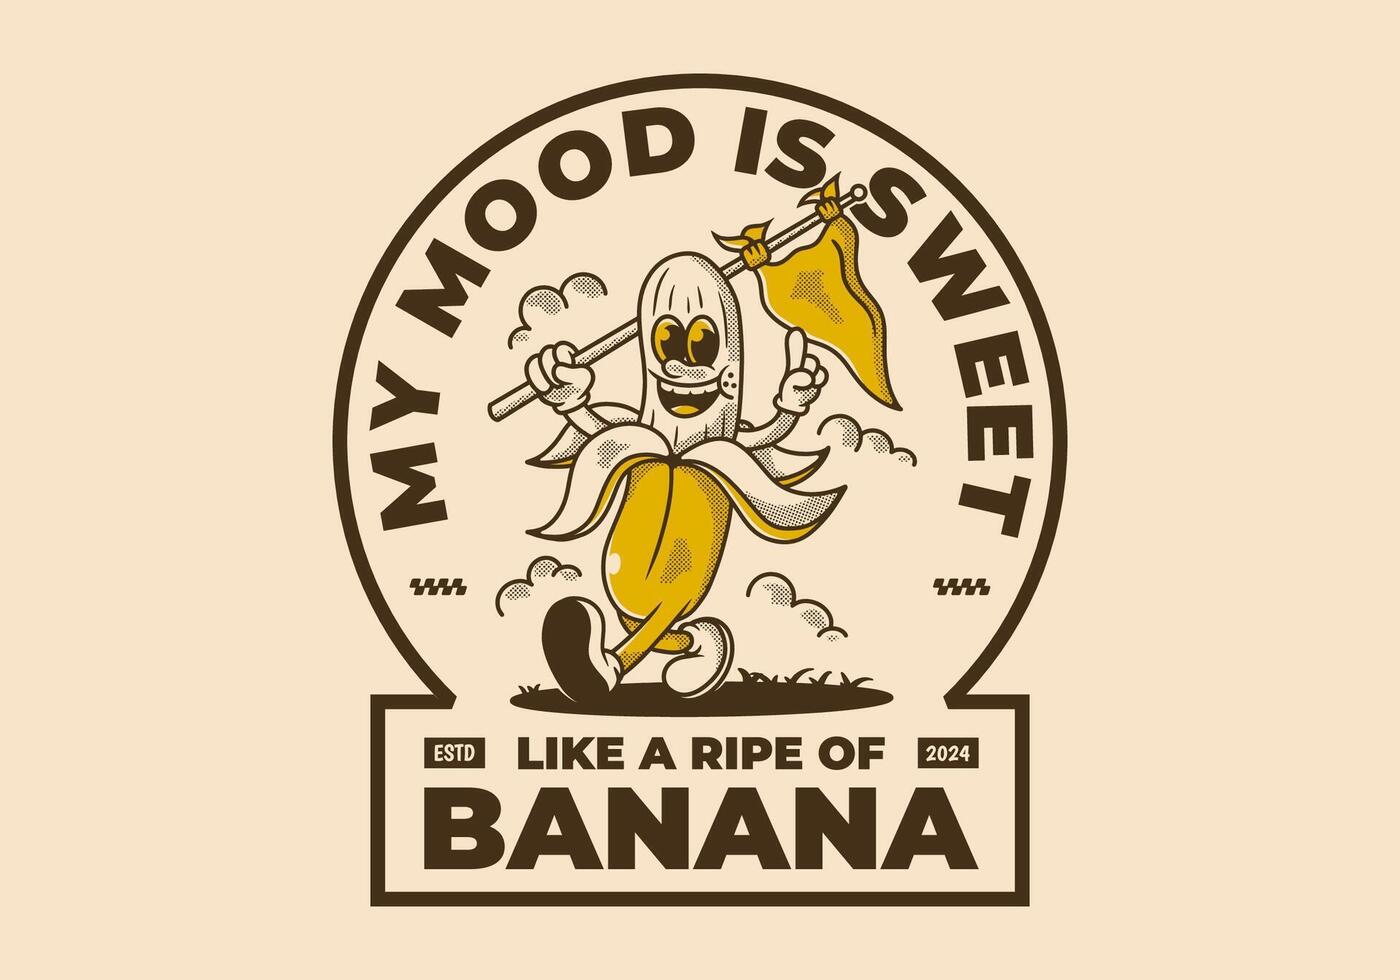 My mood is sweet, like a ripe of banana. Character of walking banana holding a triangle flag vector